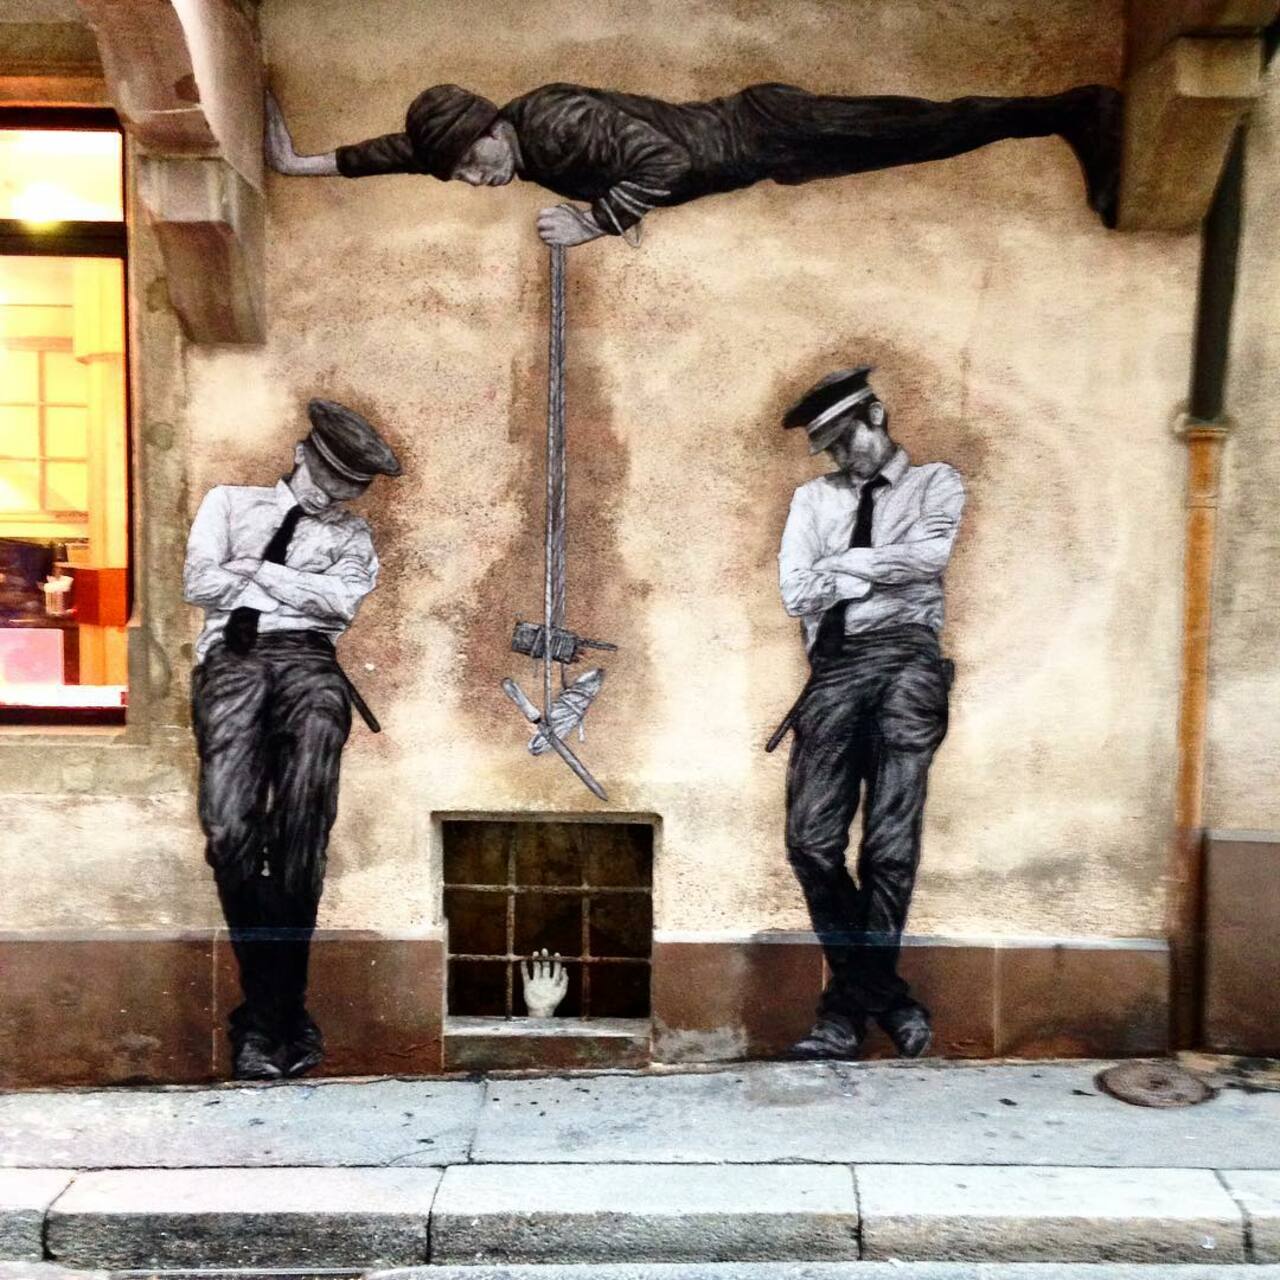 'Rescue' Something new from Levalet in Strasbourg, France. #StreetArt #Graffiti #Mural https://t.co/nxZ1ygJFxS